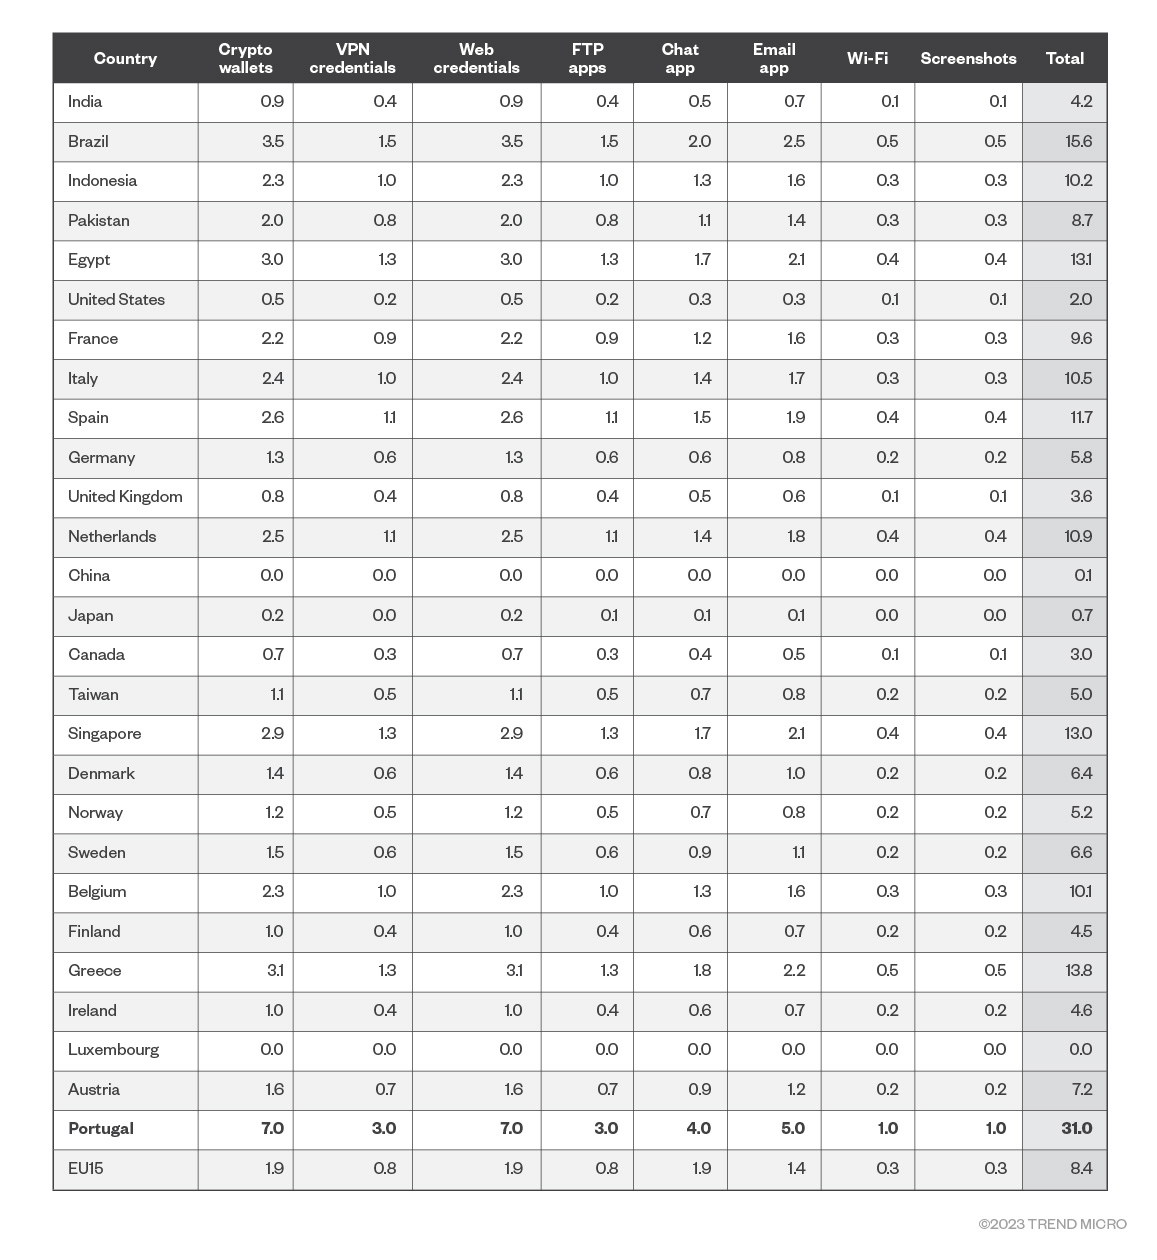 Figure 10. Data risk estimates per country based on logs per 1 million internet population